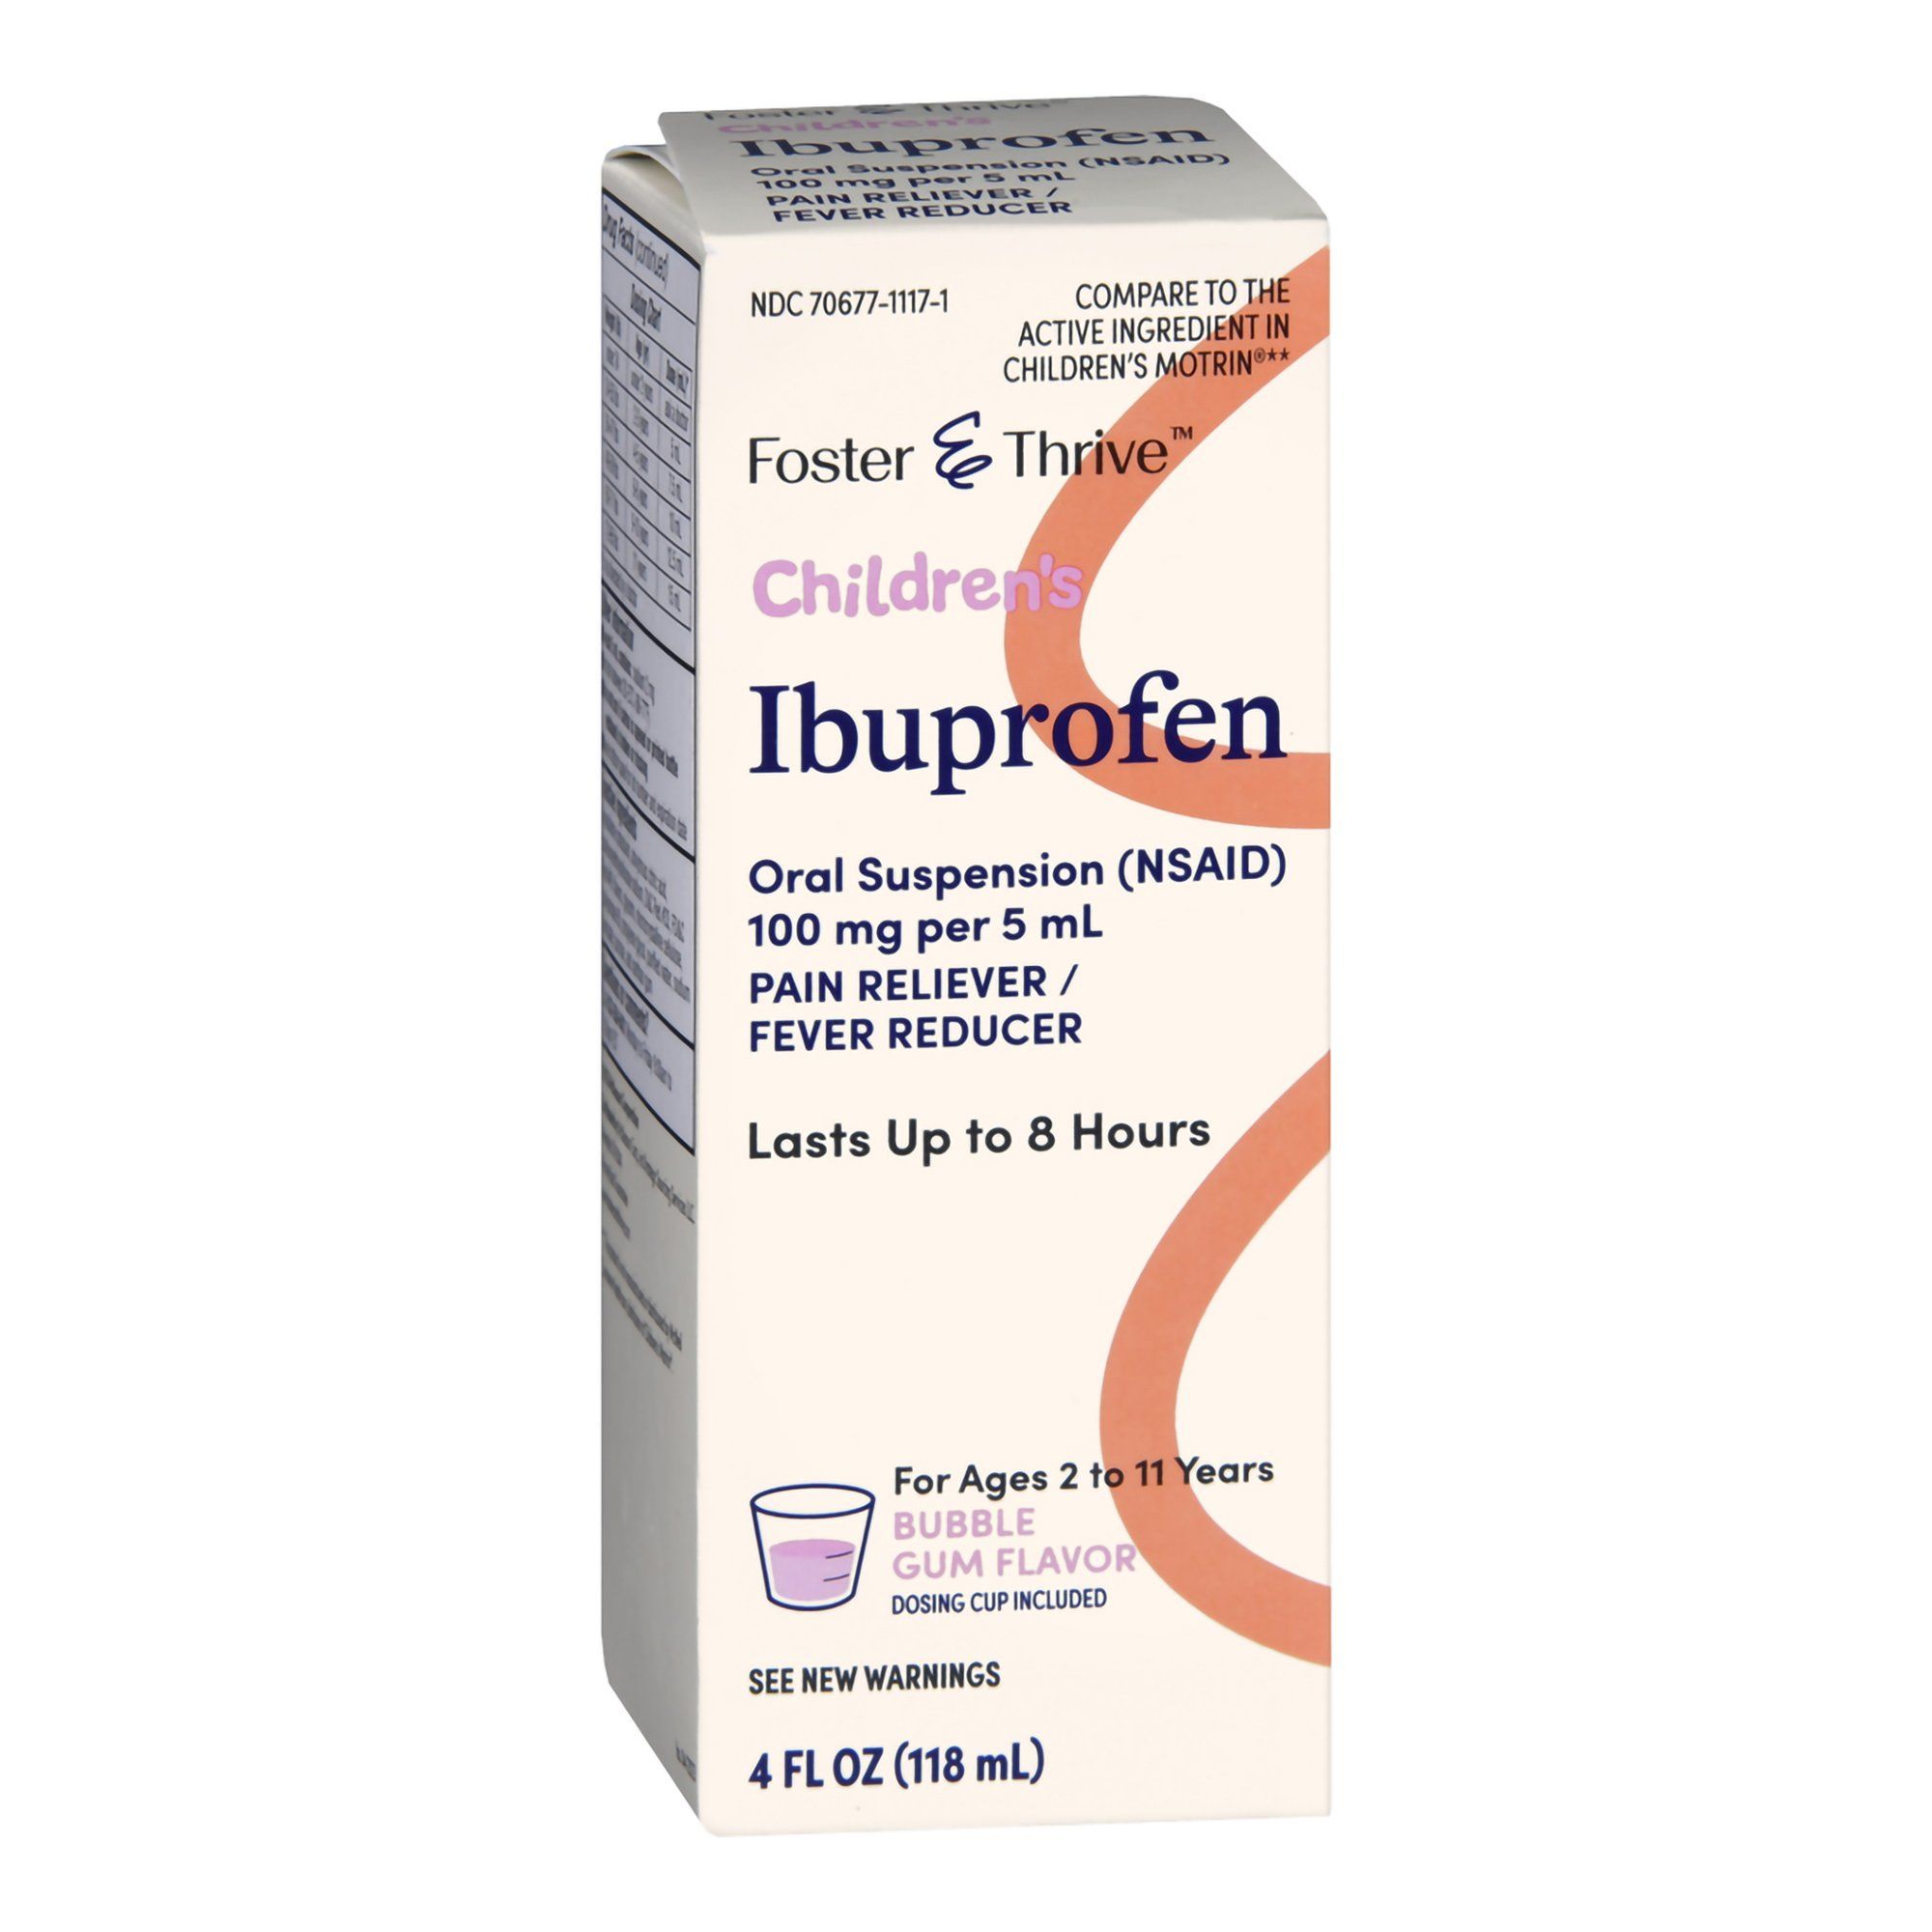 Foster & Thrive Children's Ibuprofen (NSAID),100 mg, Bubble Gum -  4 fl oz